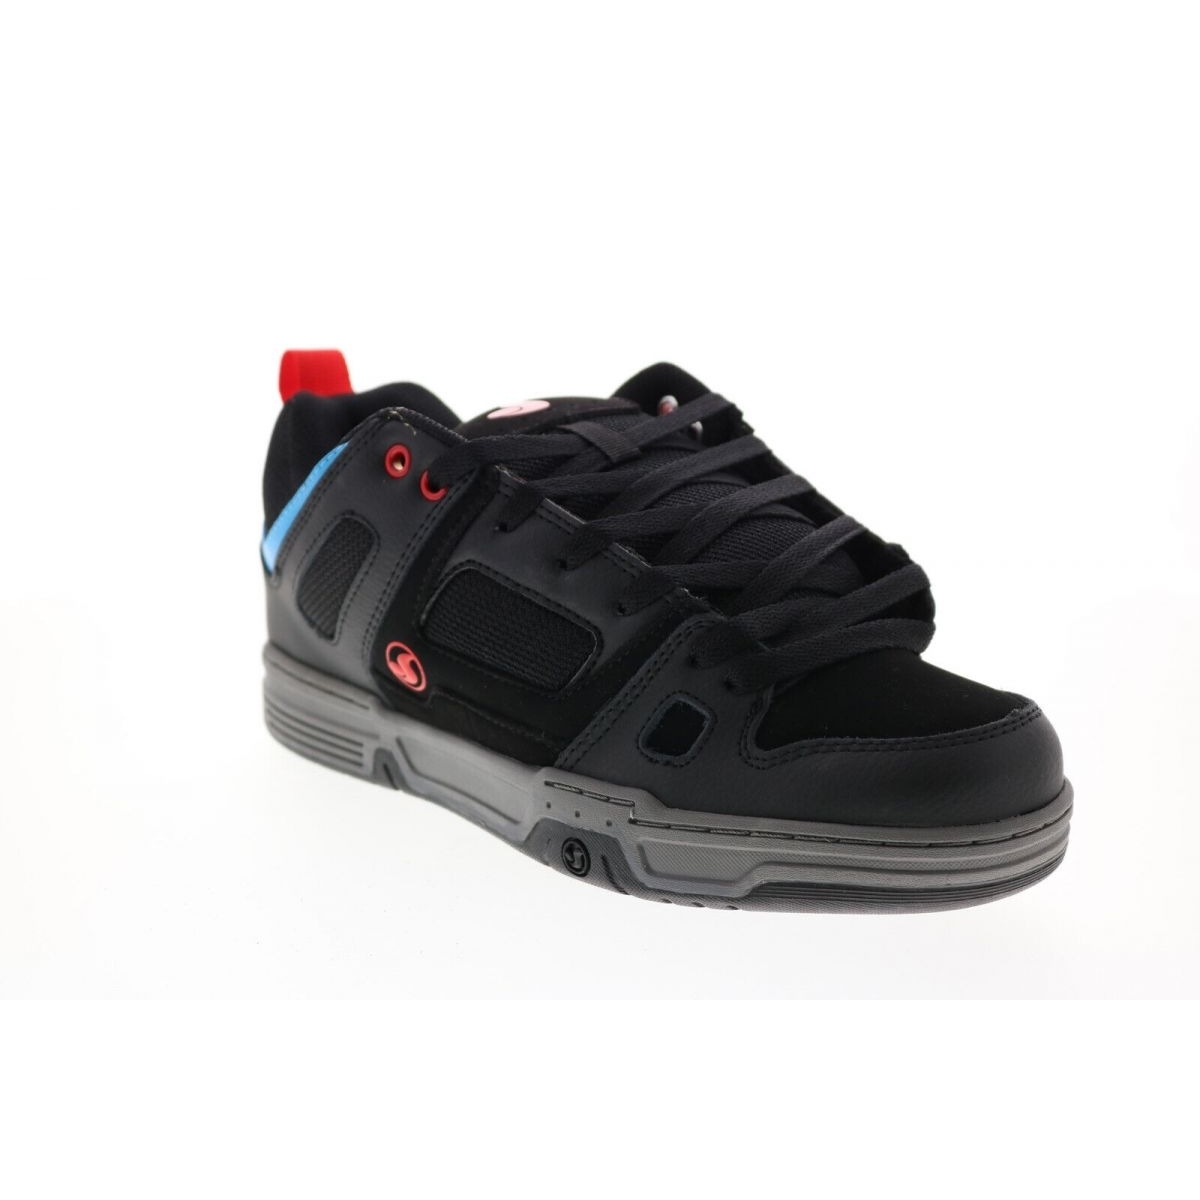 DVS Men's Gambol Skate Shoe 0 BLACK FIERY RED BLUE NUBUCK - BLACK FIERY RED BLUE NUBUCK, 11.5